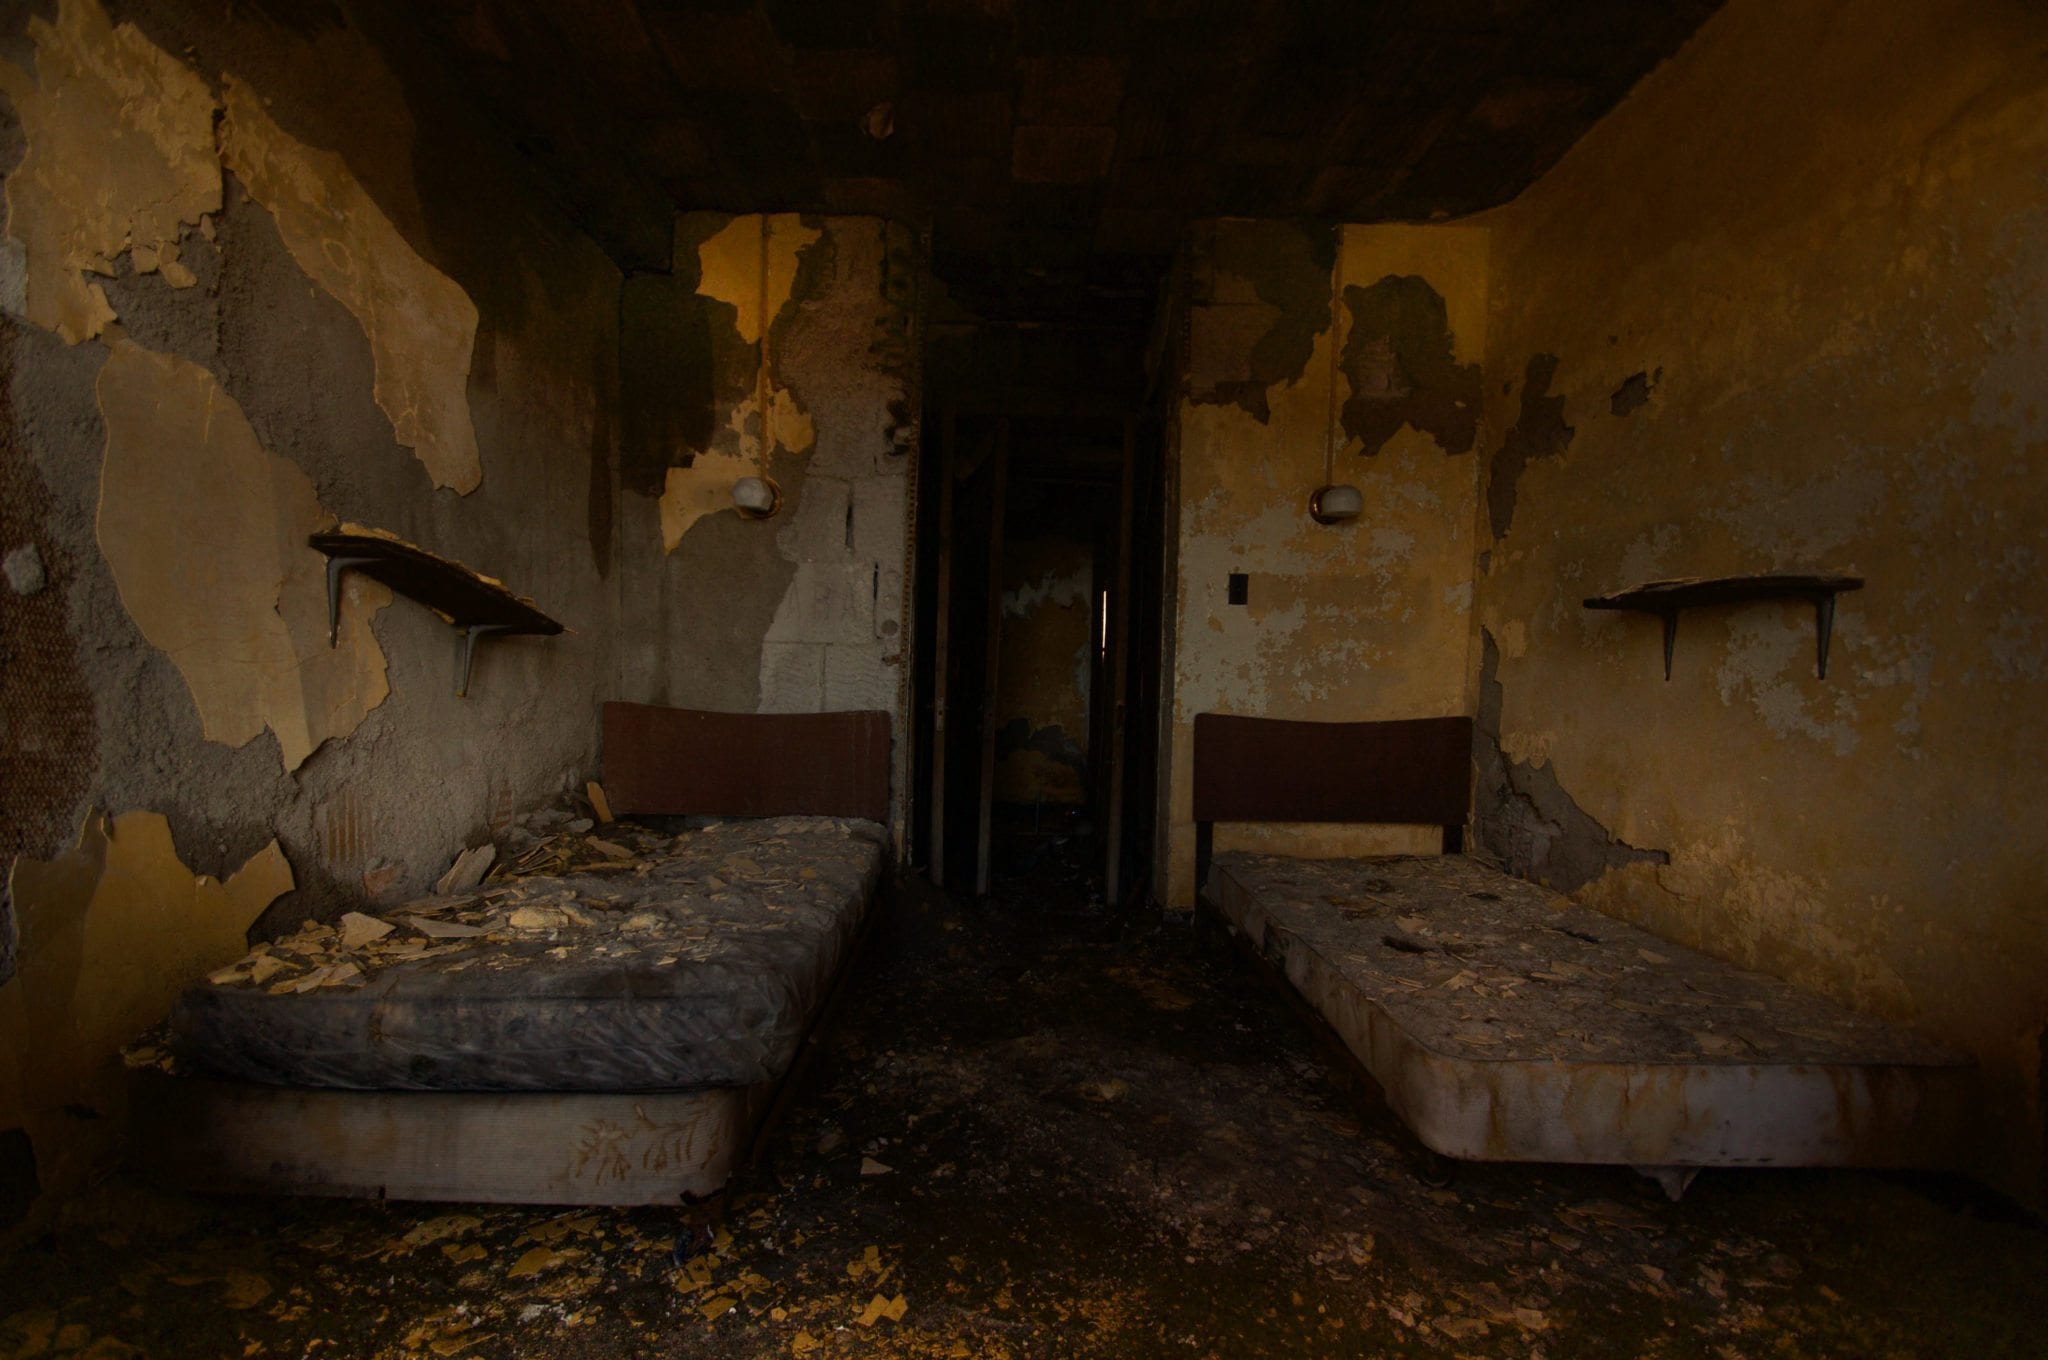 creepy image of abandoned places